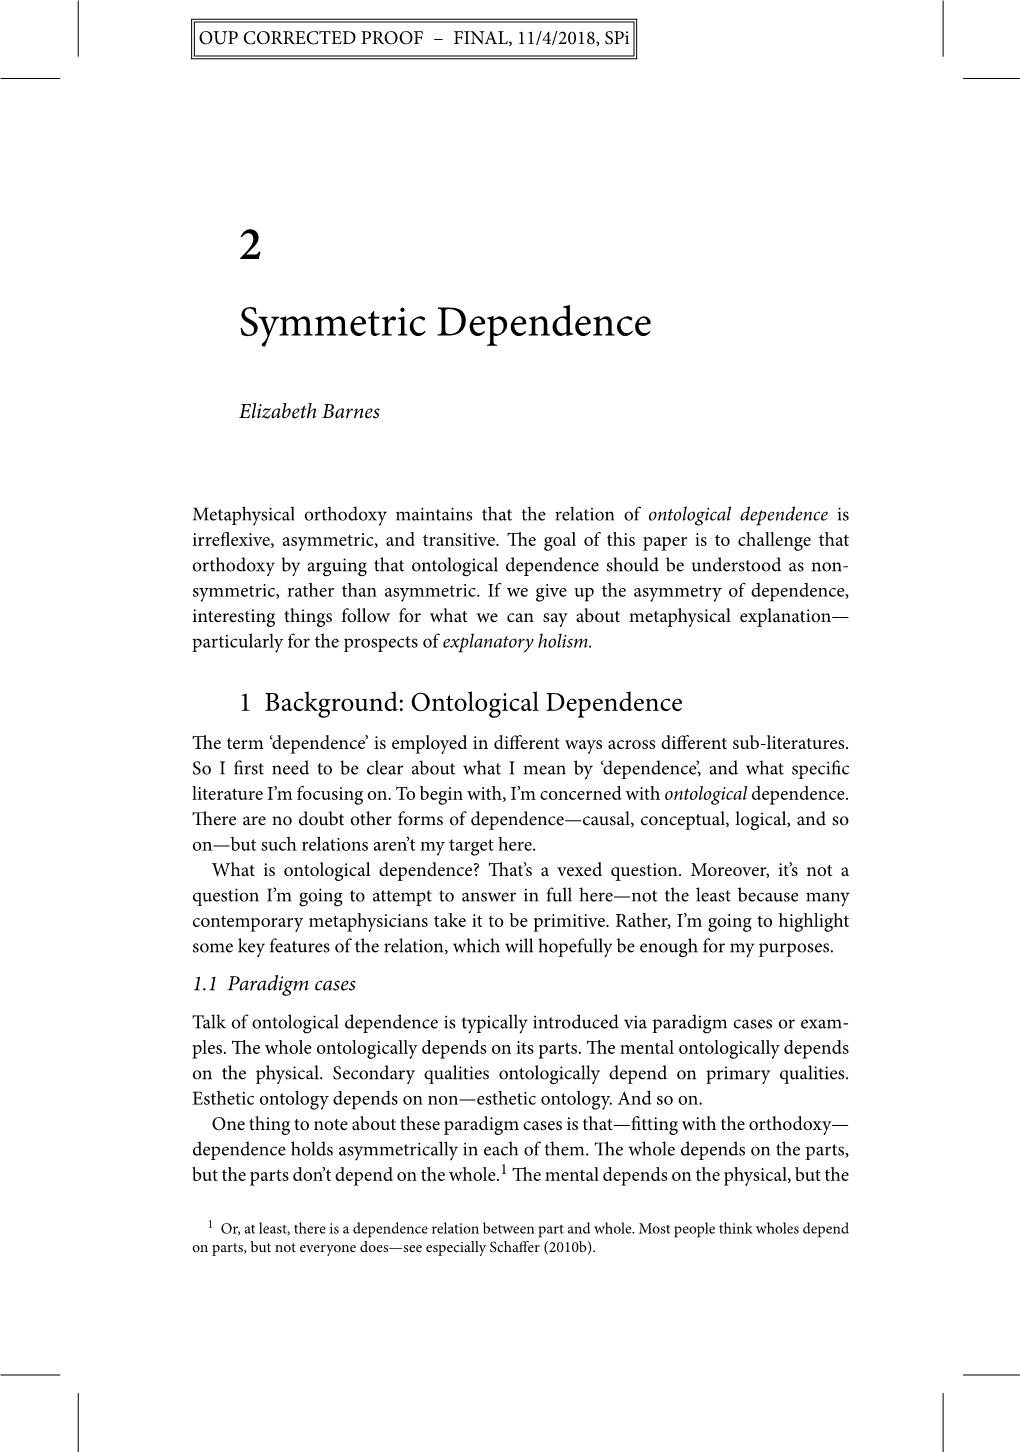 Symmetric Dependence